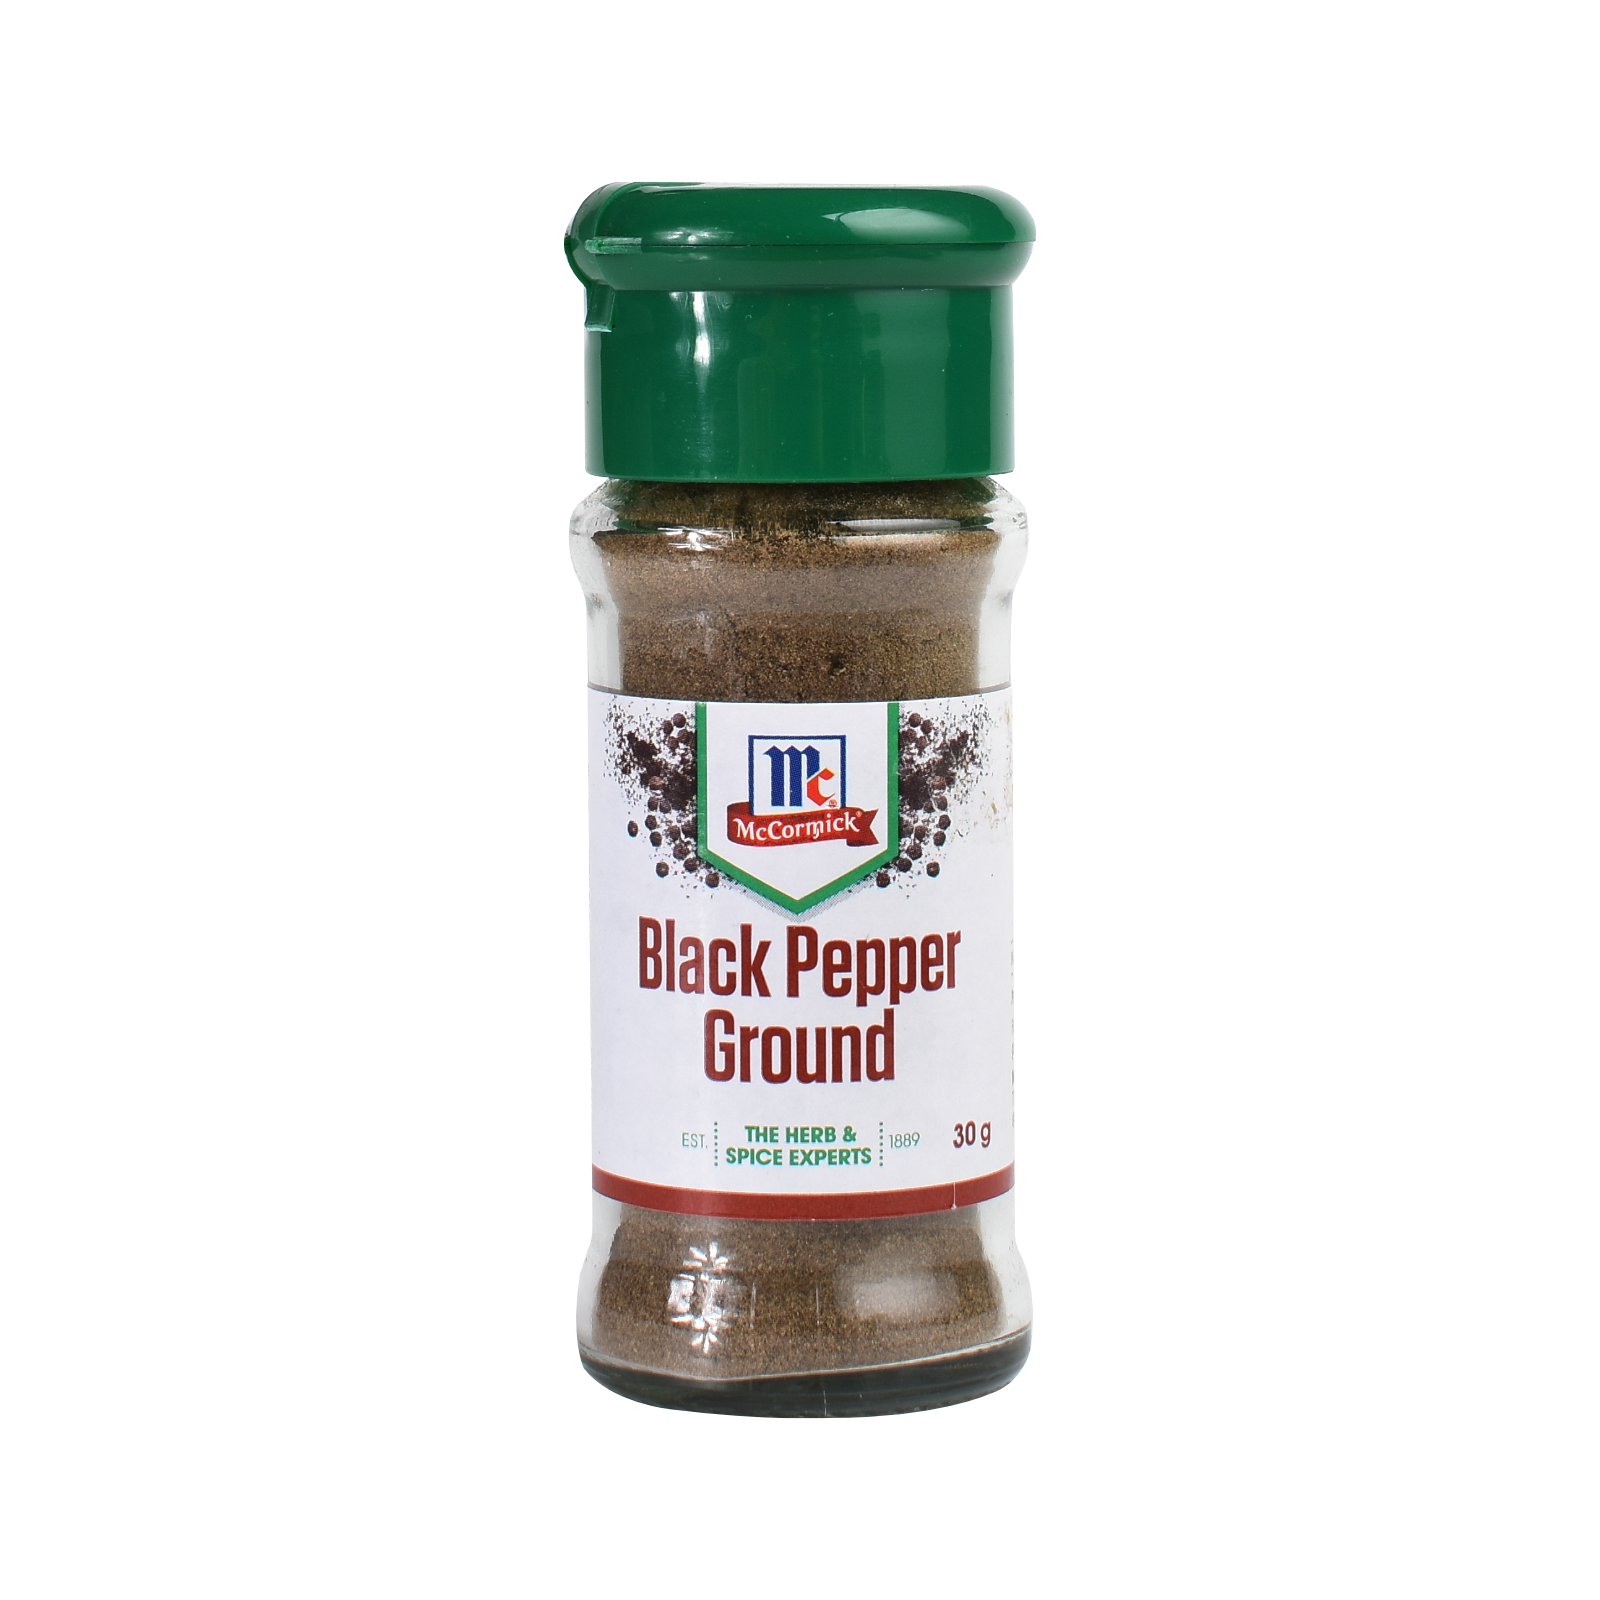 mc black pepper ground.png